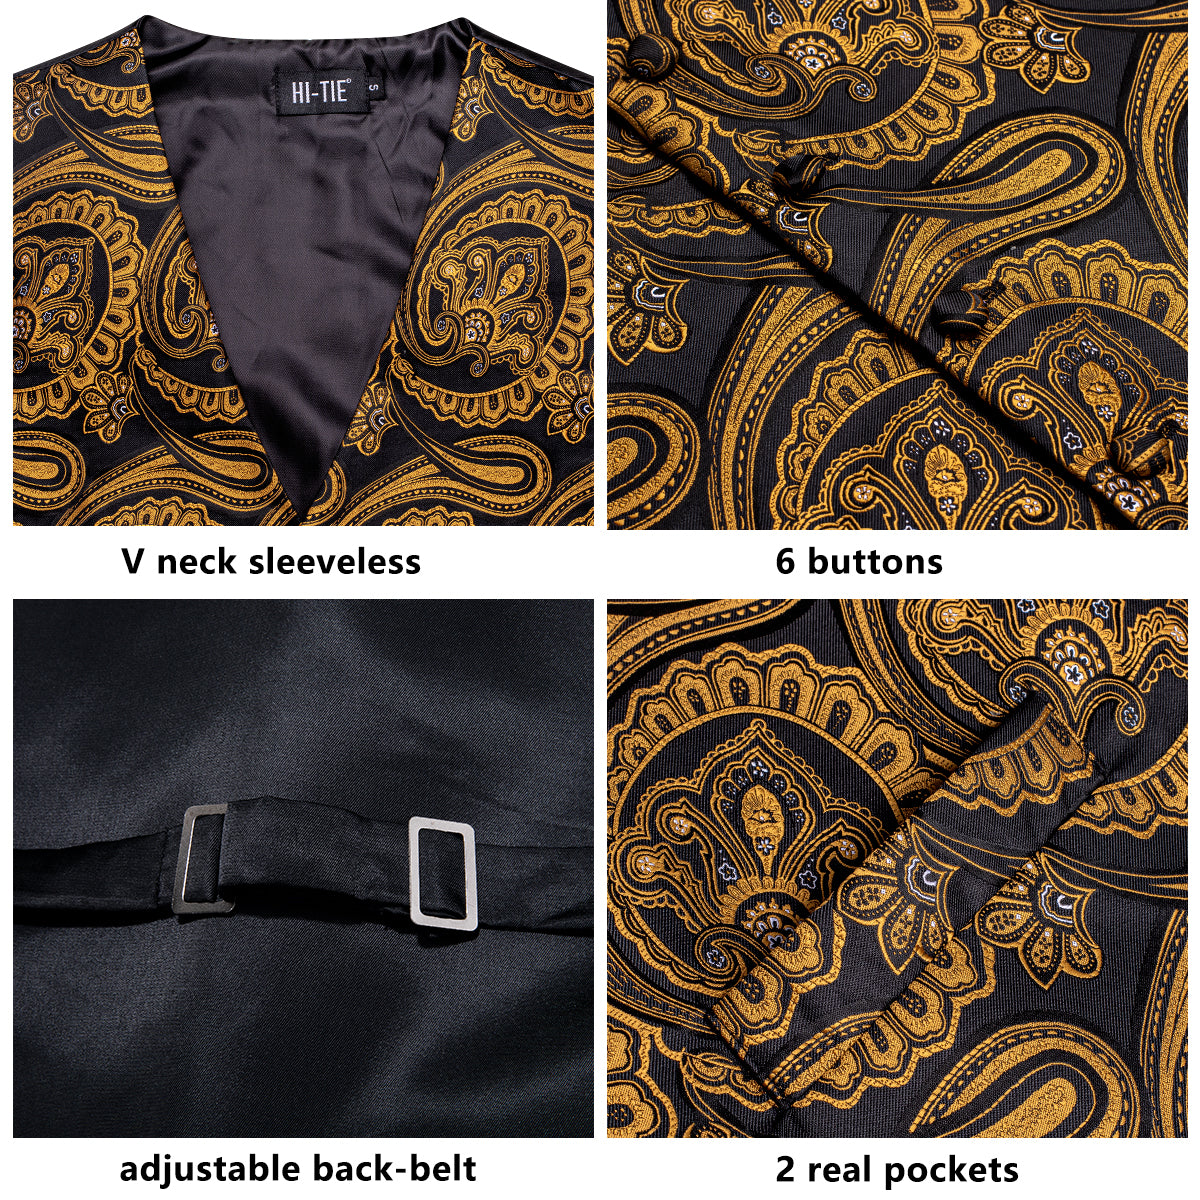 New Golden Black Paisley with White Floral Silk Men's Vest Hanky Cufflinks Tie Set Waistcoat Suit Set